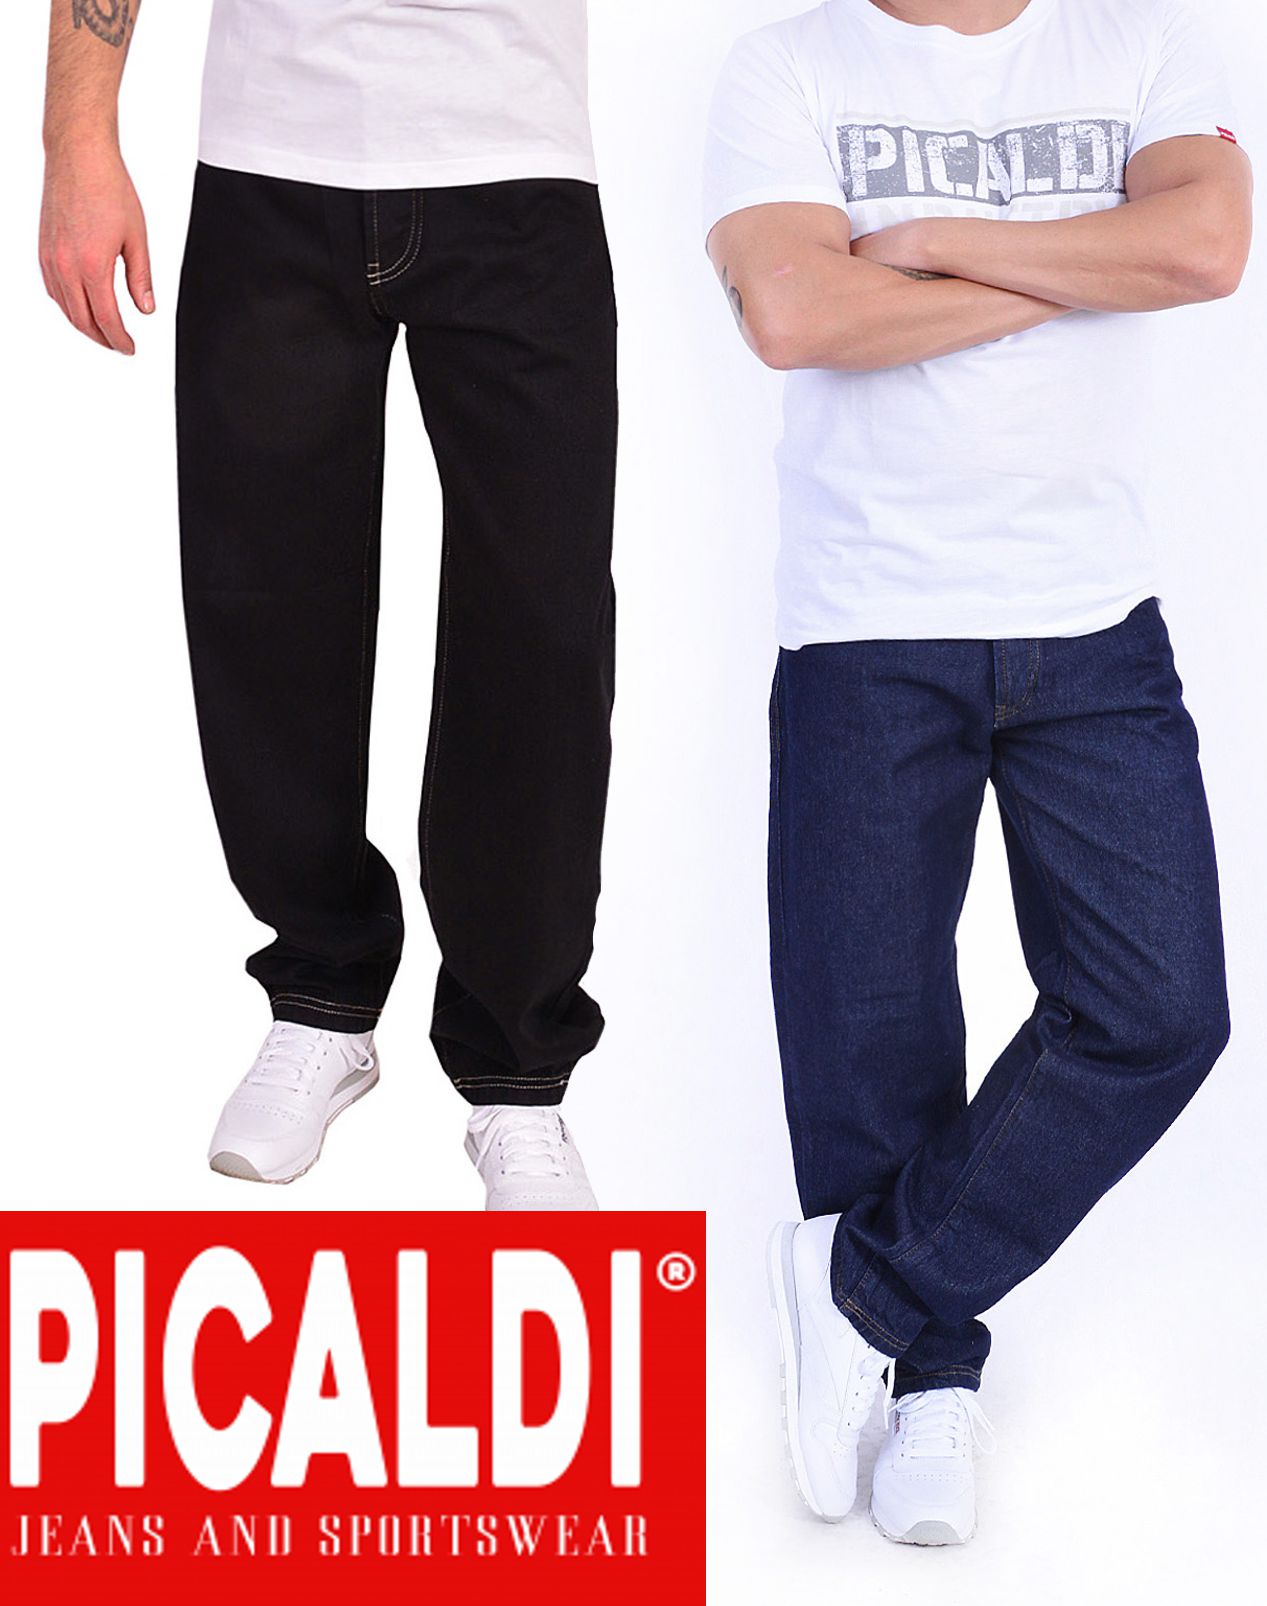 Picaldi Styles